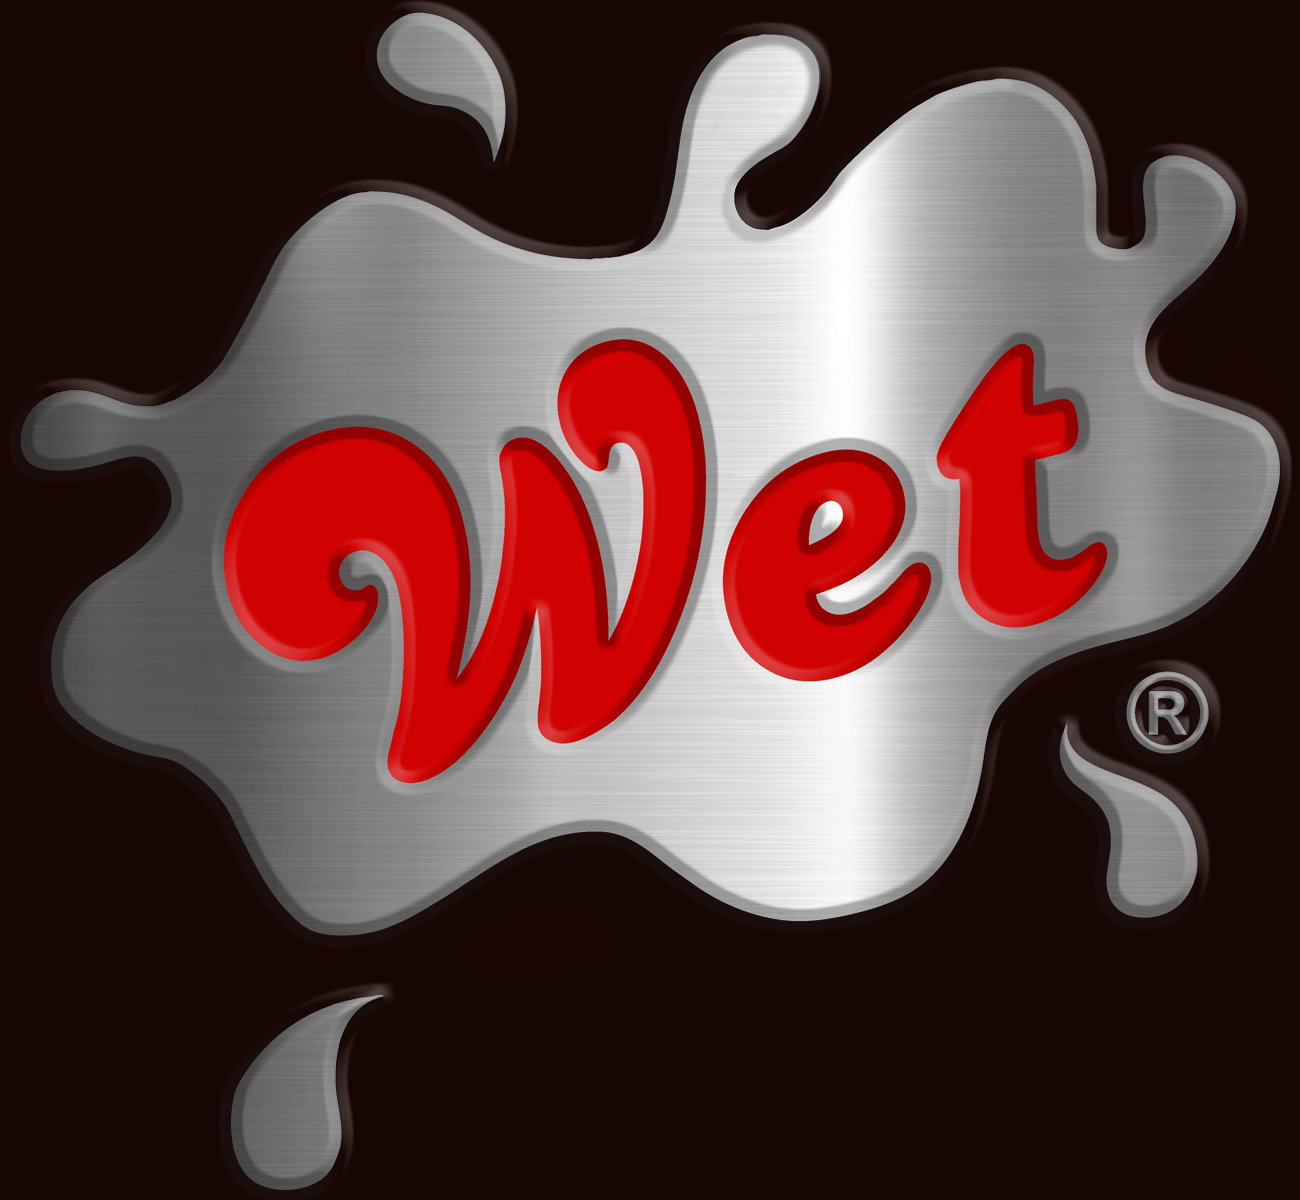 Wet Logo - Wet Digital Image® Company Logos